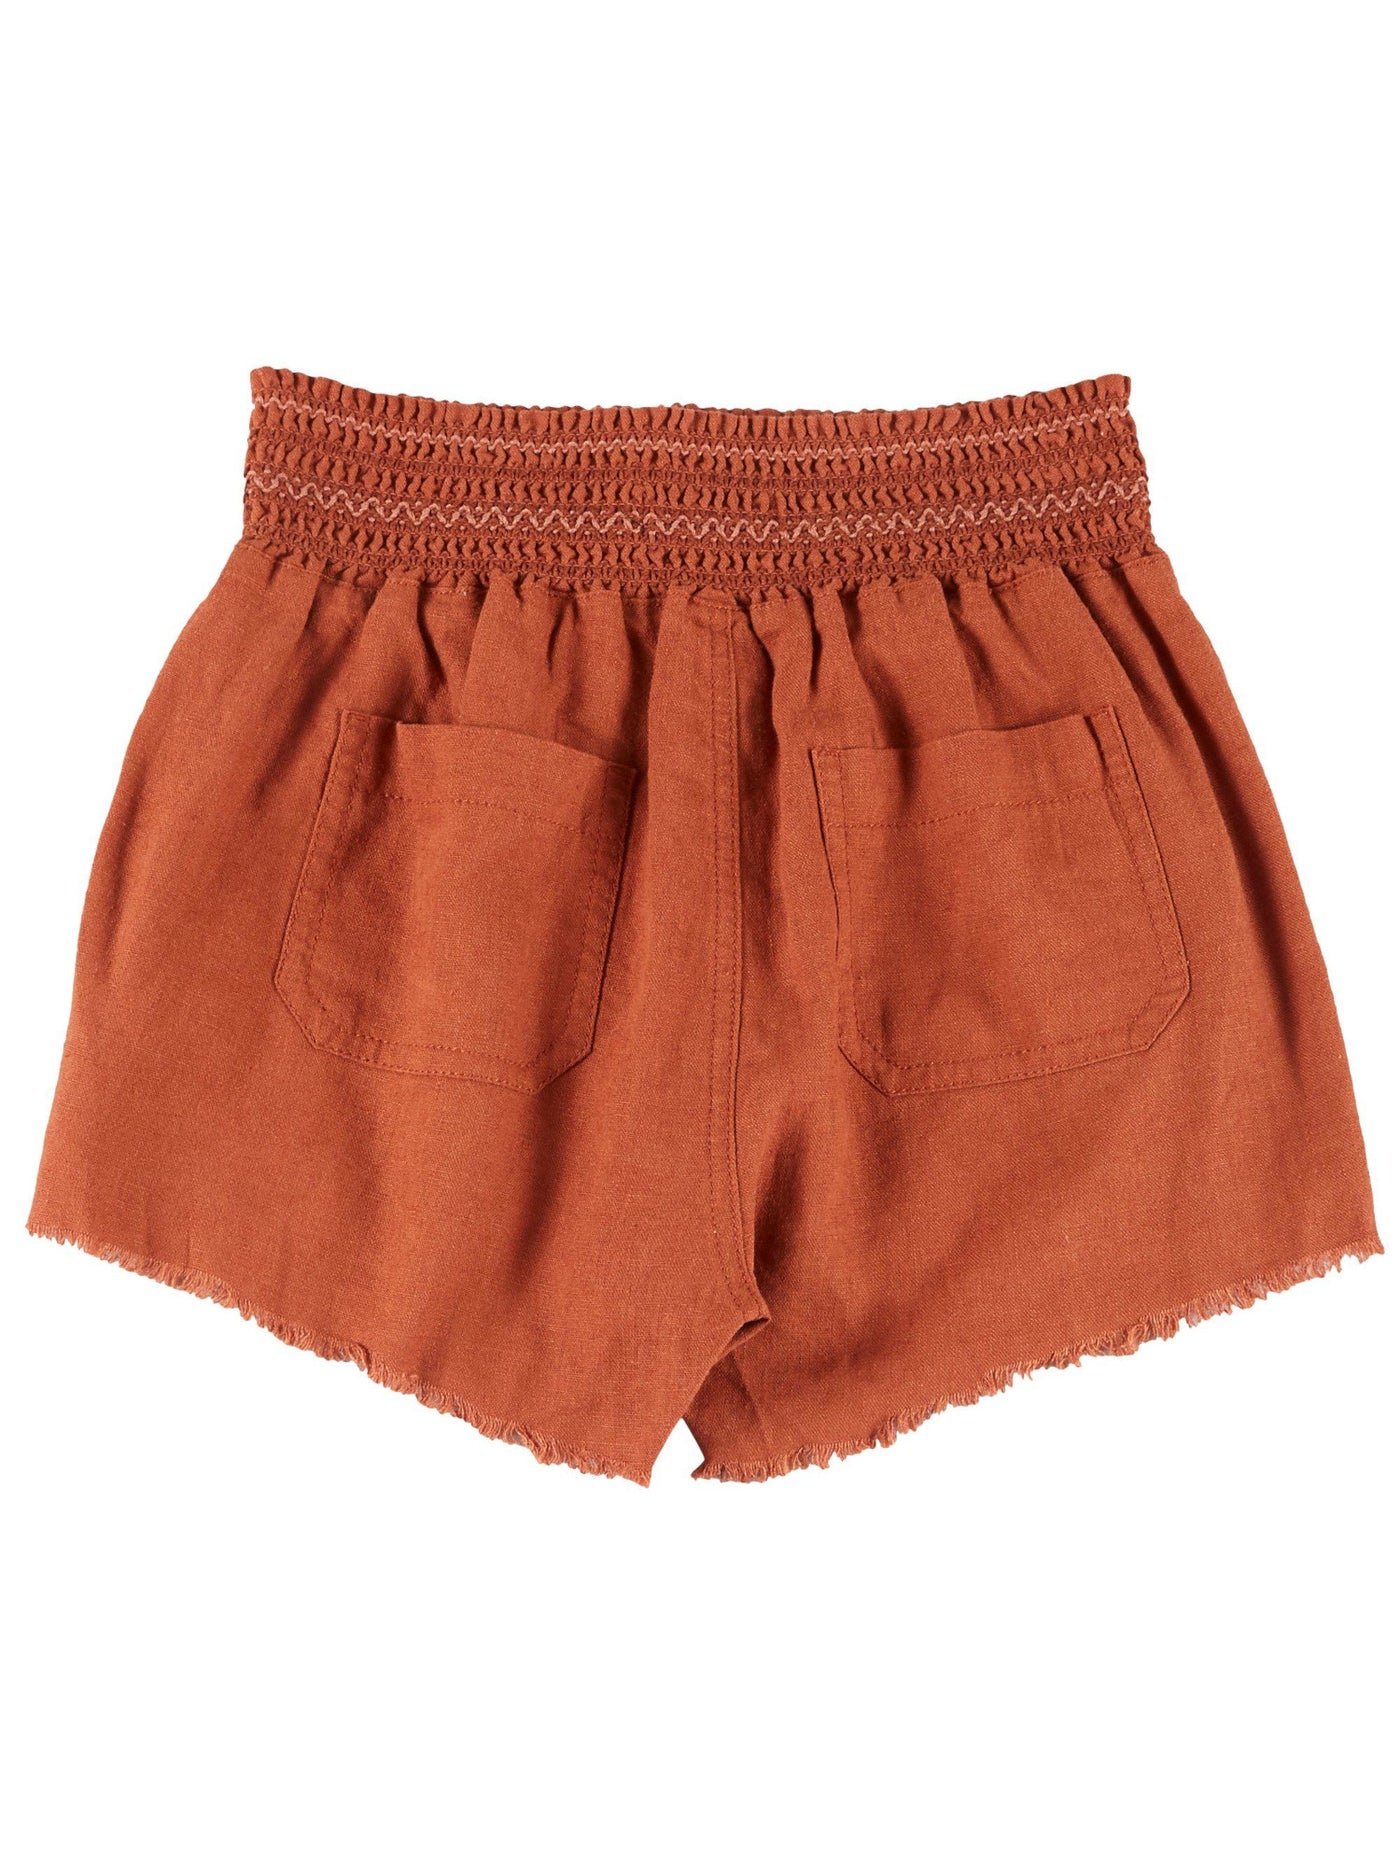 AMERICAN REWASH ORIGINAL BRAND Womens Brown Smocked Pocketed Tie Detail Frayed Hem Lounge Shorts Shorts Juniors M